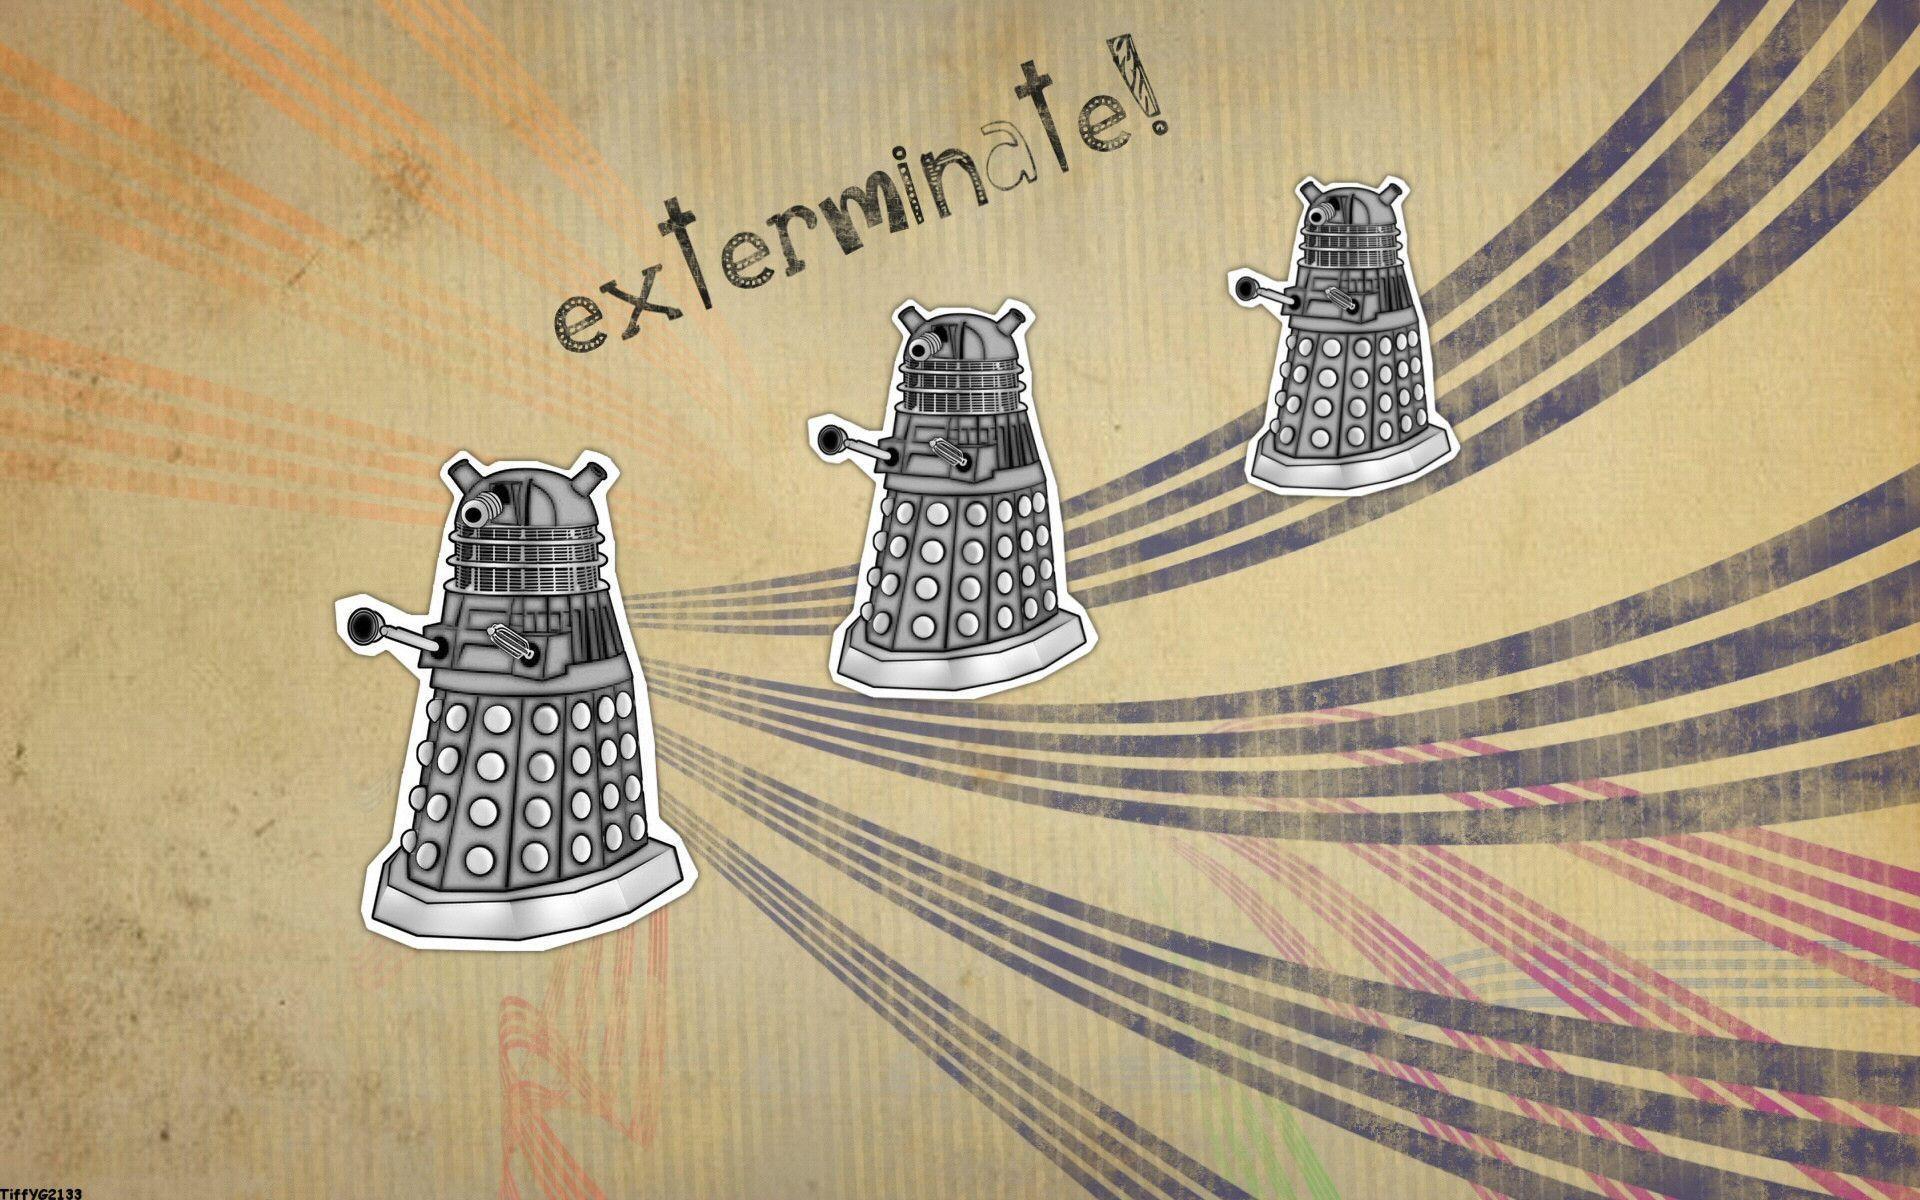 Doctor Who - Dalek Wallpaper by heggcnote on DeviantArt